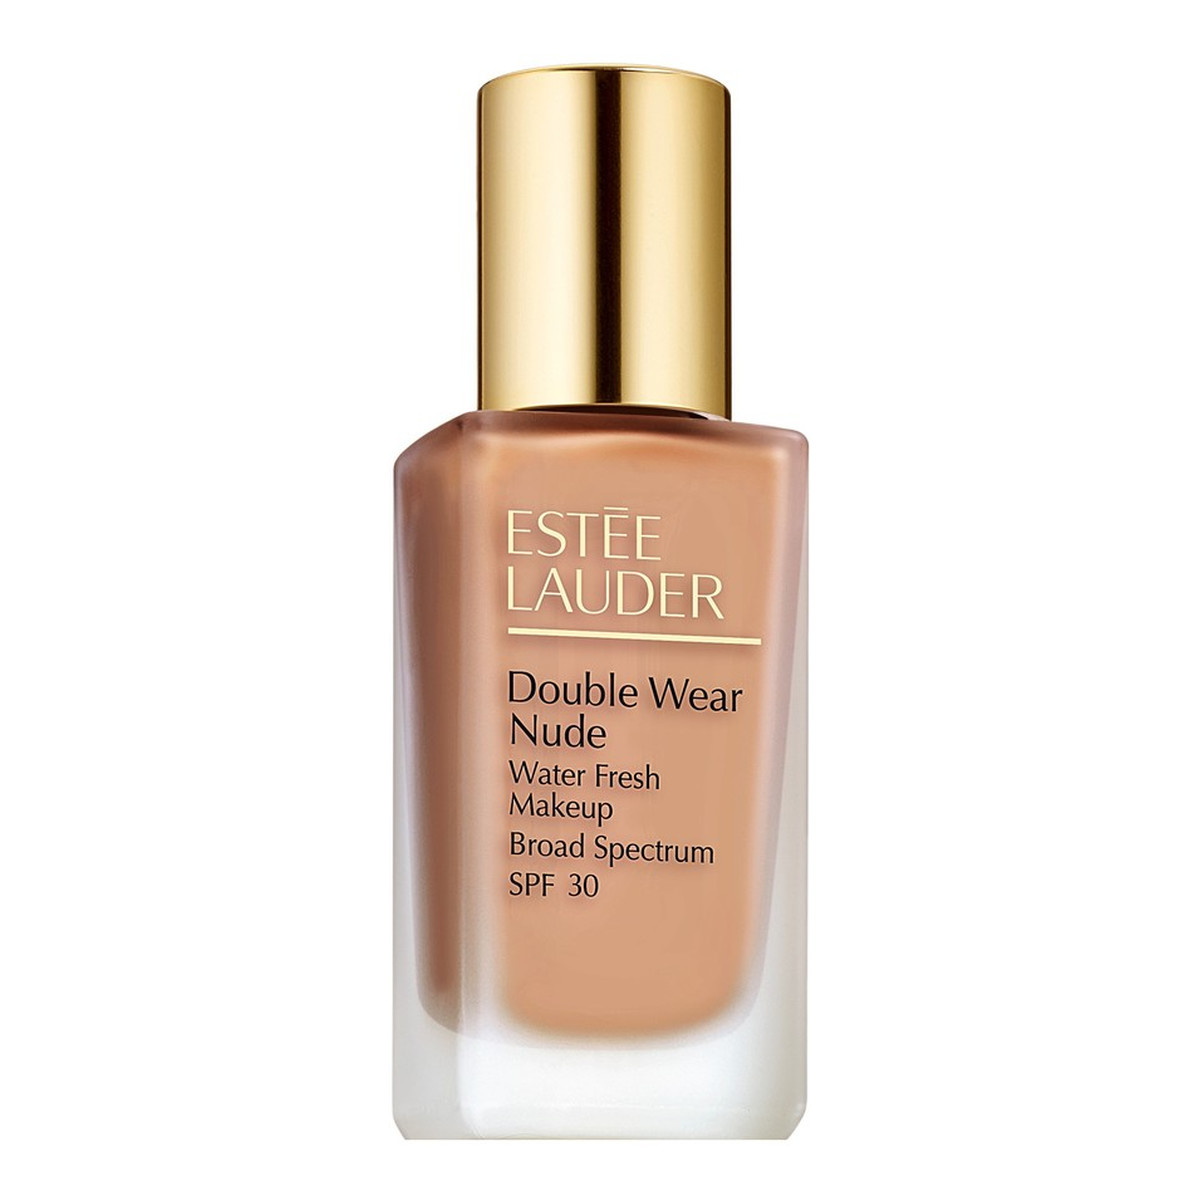 Estee Lauder Double Wear Nude Water Fresh Makeup SPF30 Lekki podkład 30ml